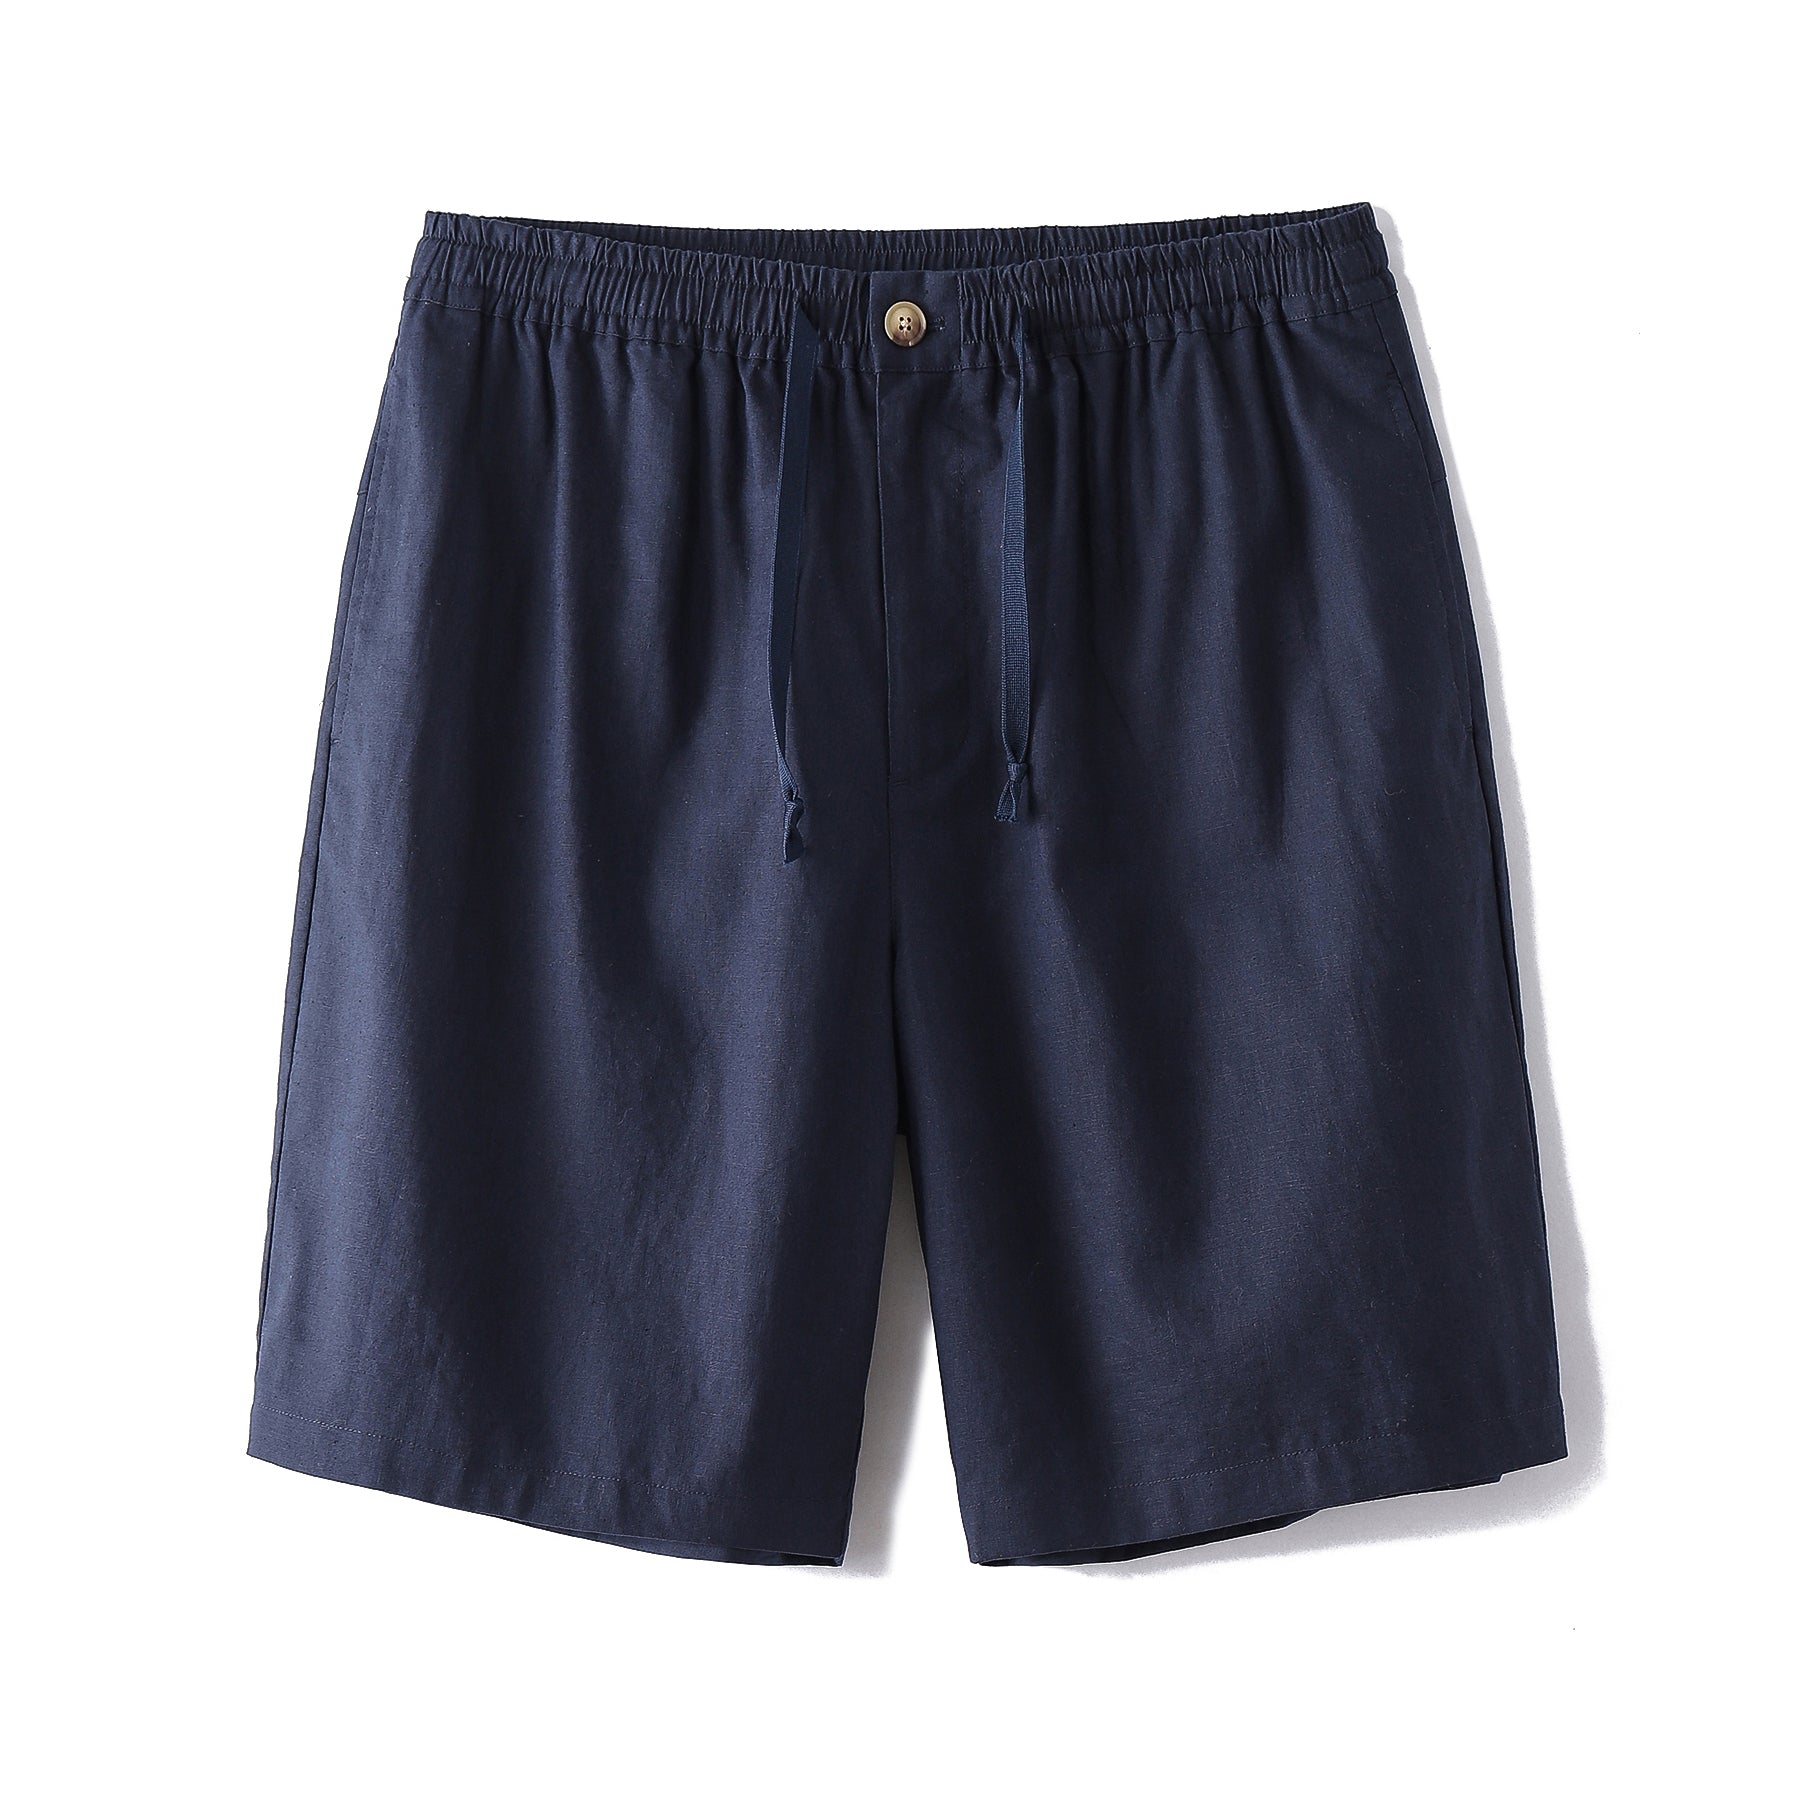 Mid-Rise Straight Bermuda 8-10 Inch Shorts - NAVY BLUE Version 1.0